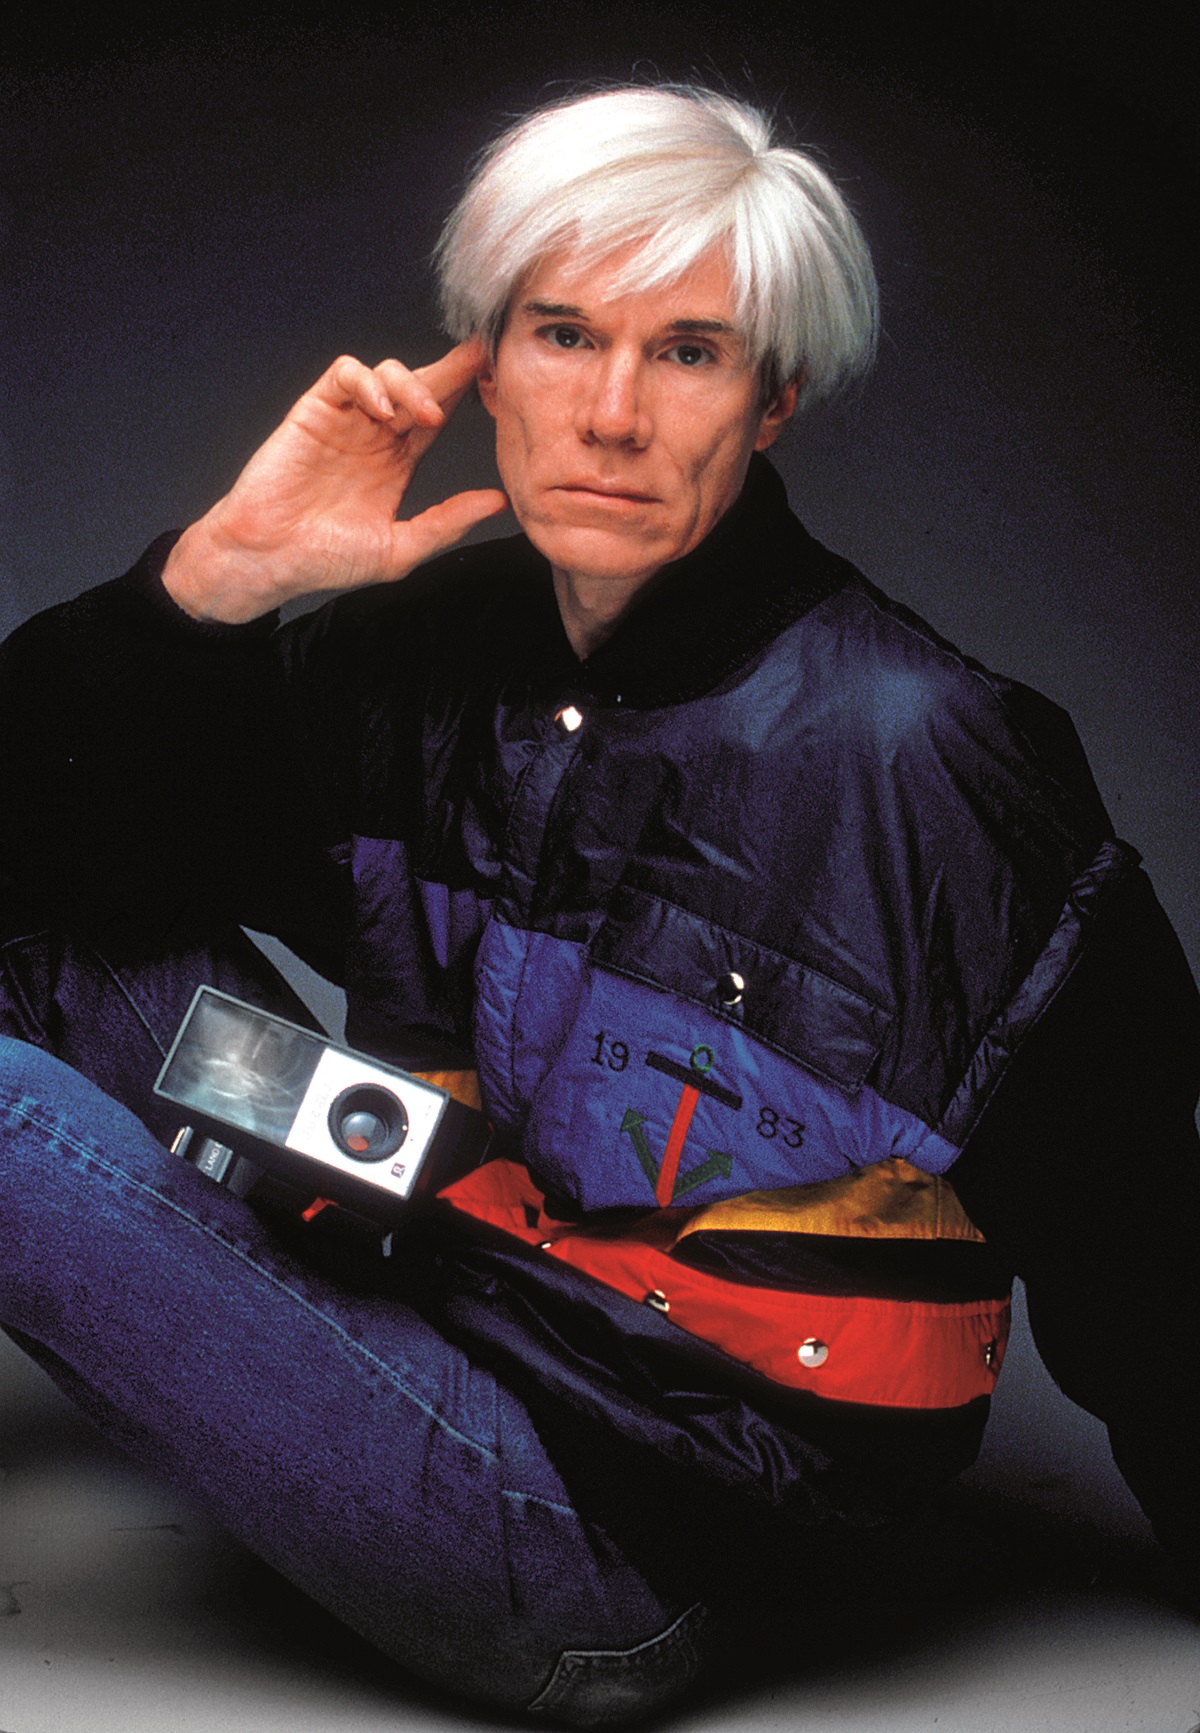 Andy Warhol-Les Contemporains- campagne Iceberg par Olivier Tuscani